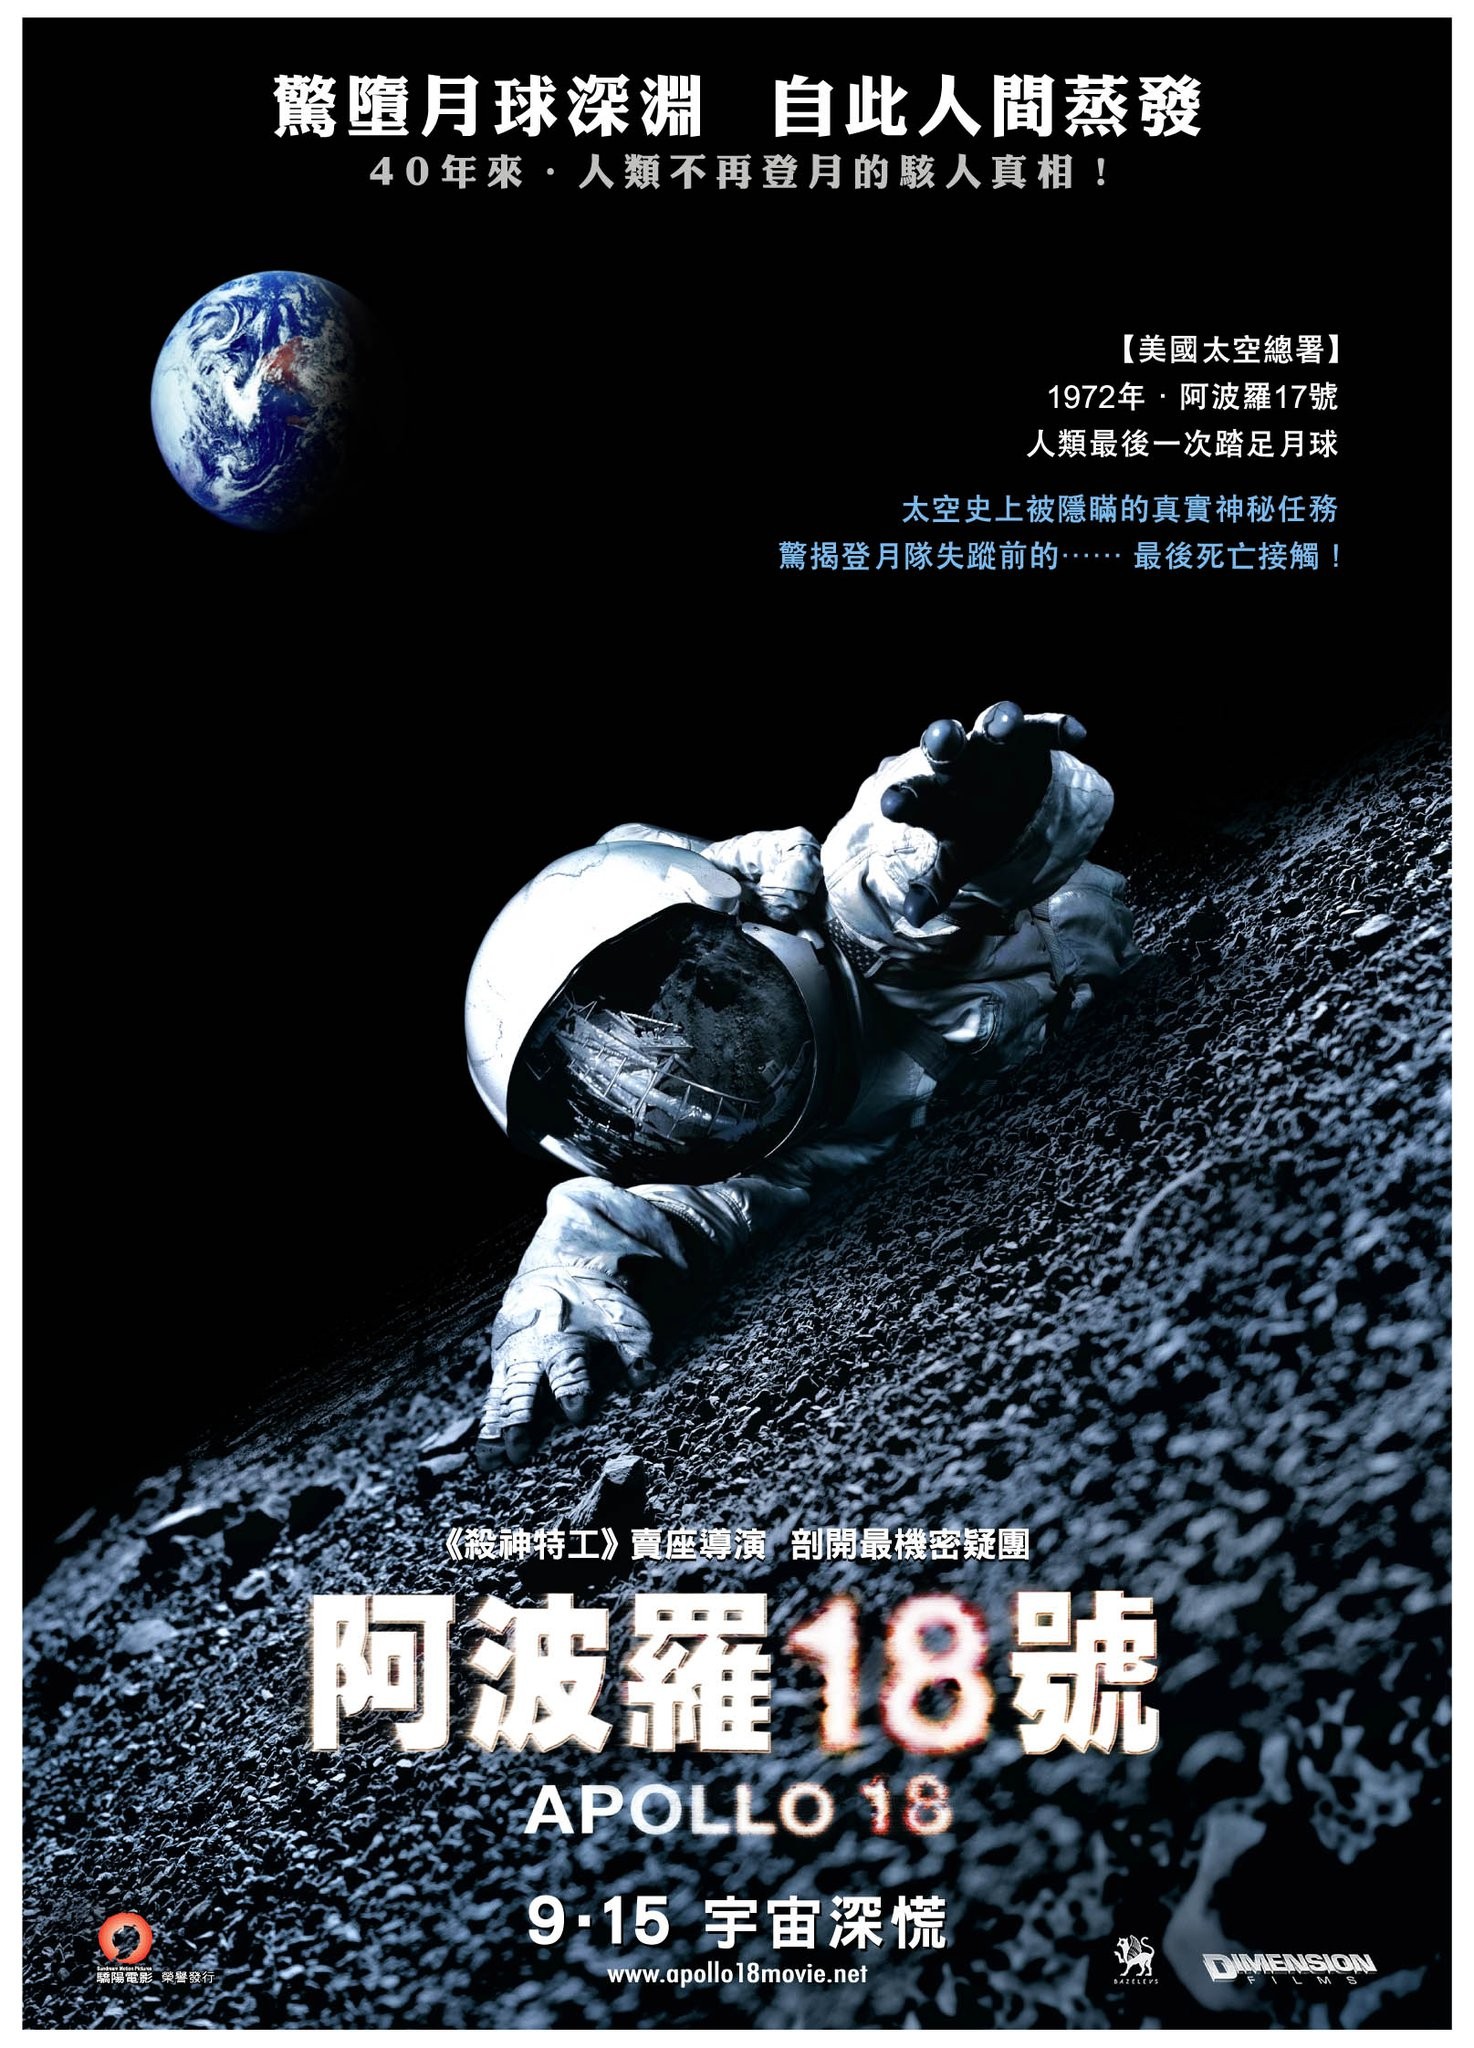 Mega Sized Movie Poster Image for Apollo 18 (#4 of 5)